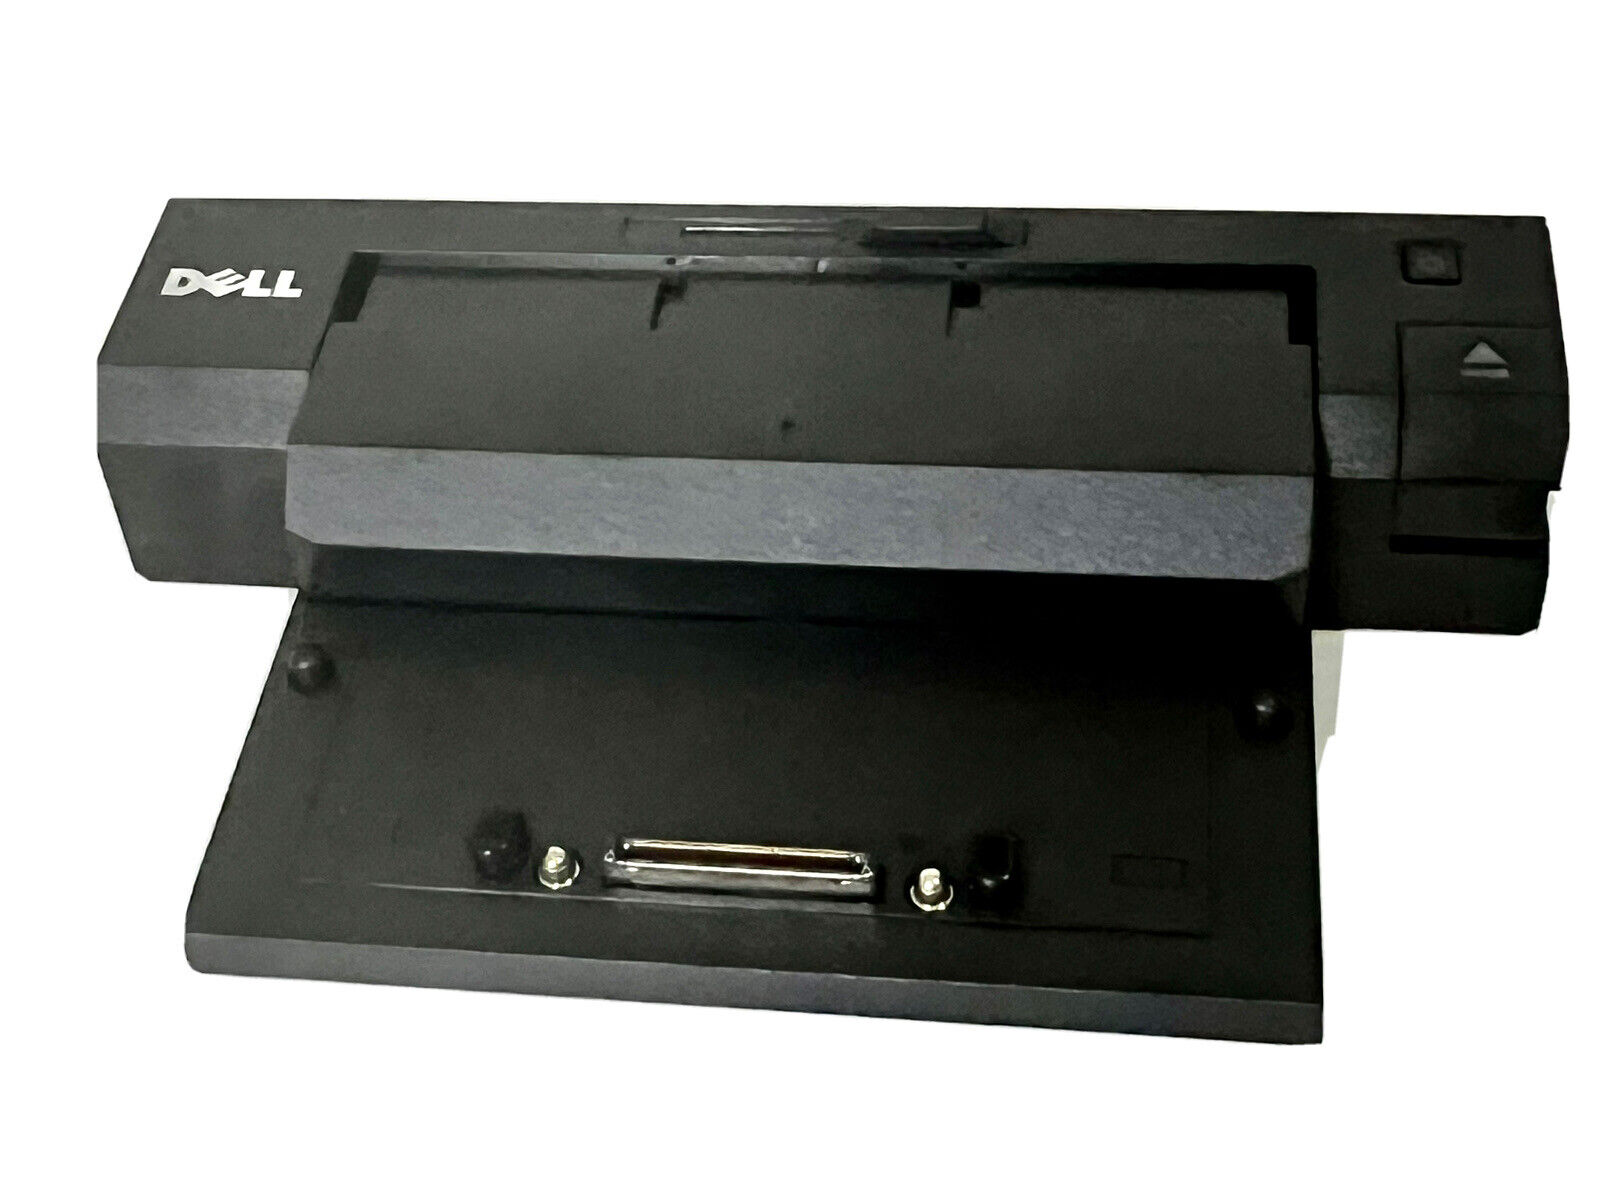 Dell PR02X E-Port Plus II Laptop Docking Station Port Replicator Black w/Adapter